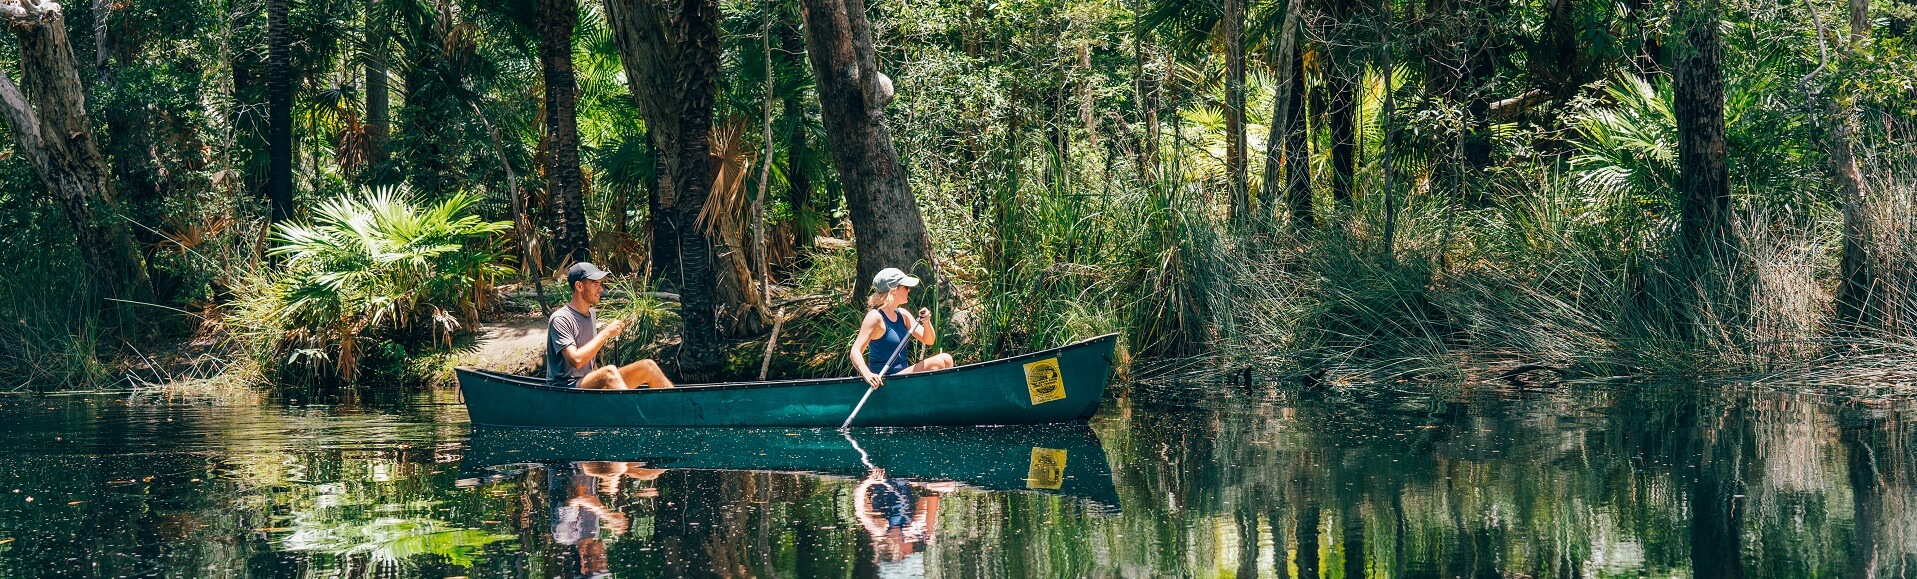 Noosa Everglades Cruise or Canoe Tour